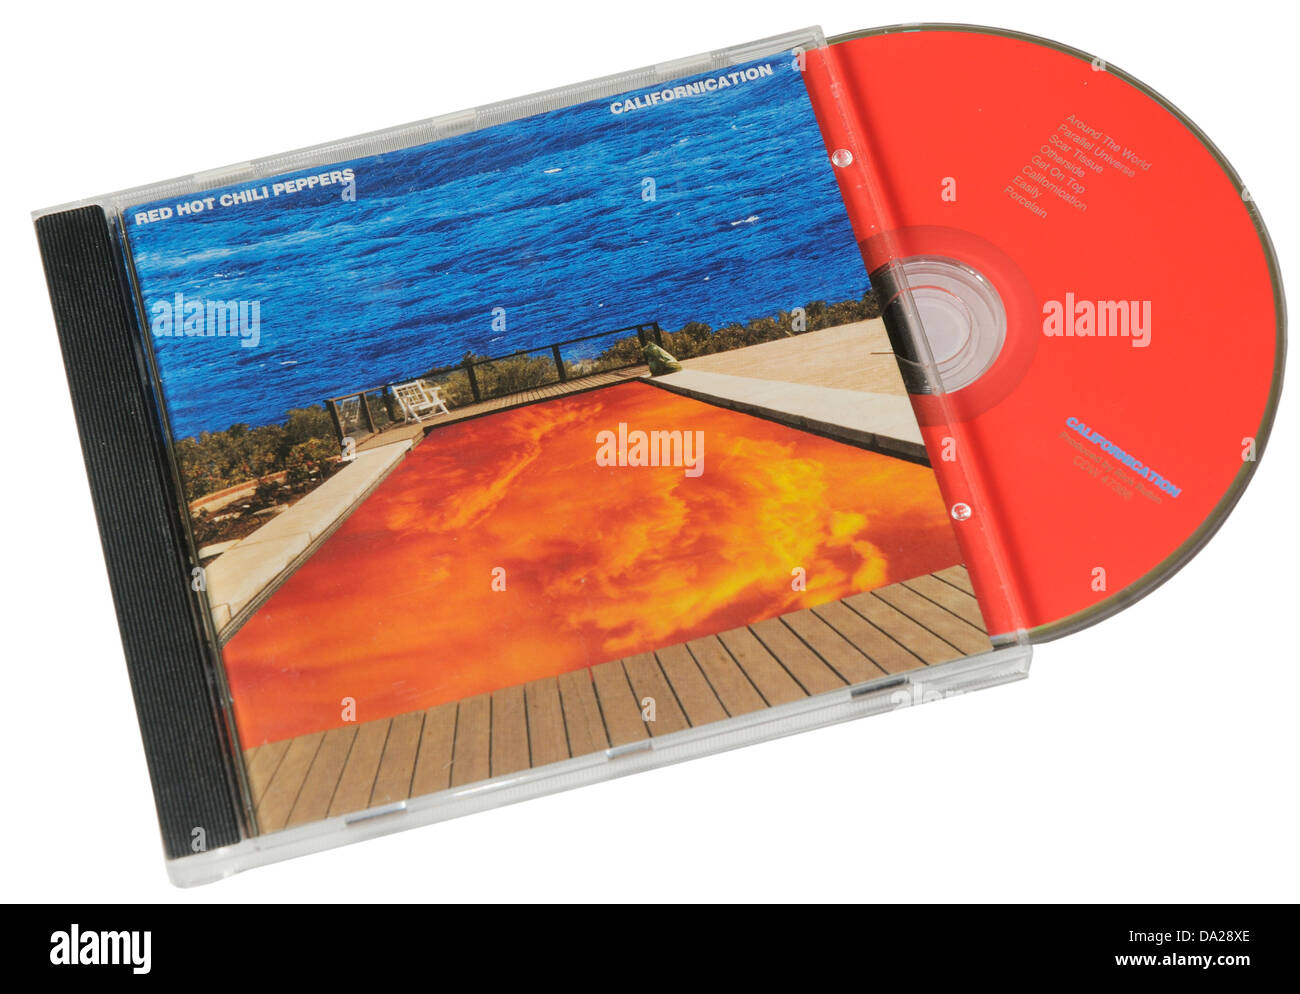 Red Hot Chili Peppers Californication album su CD Foto stock - Alamy